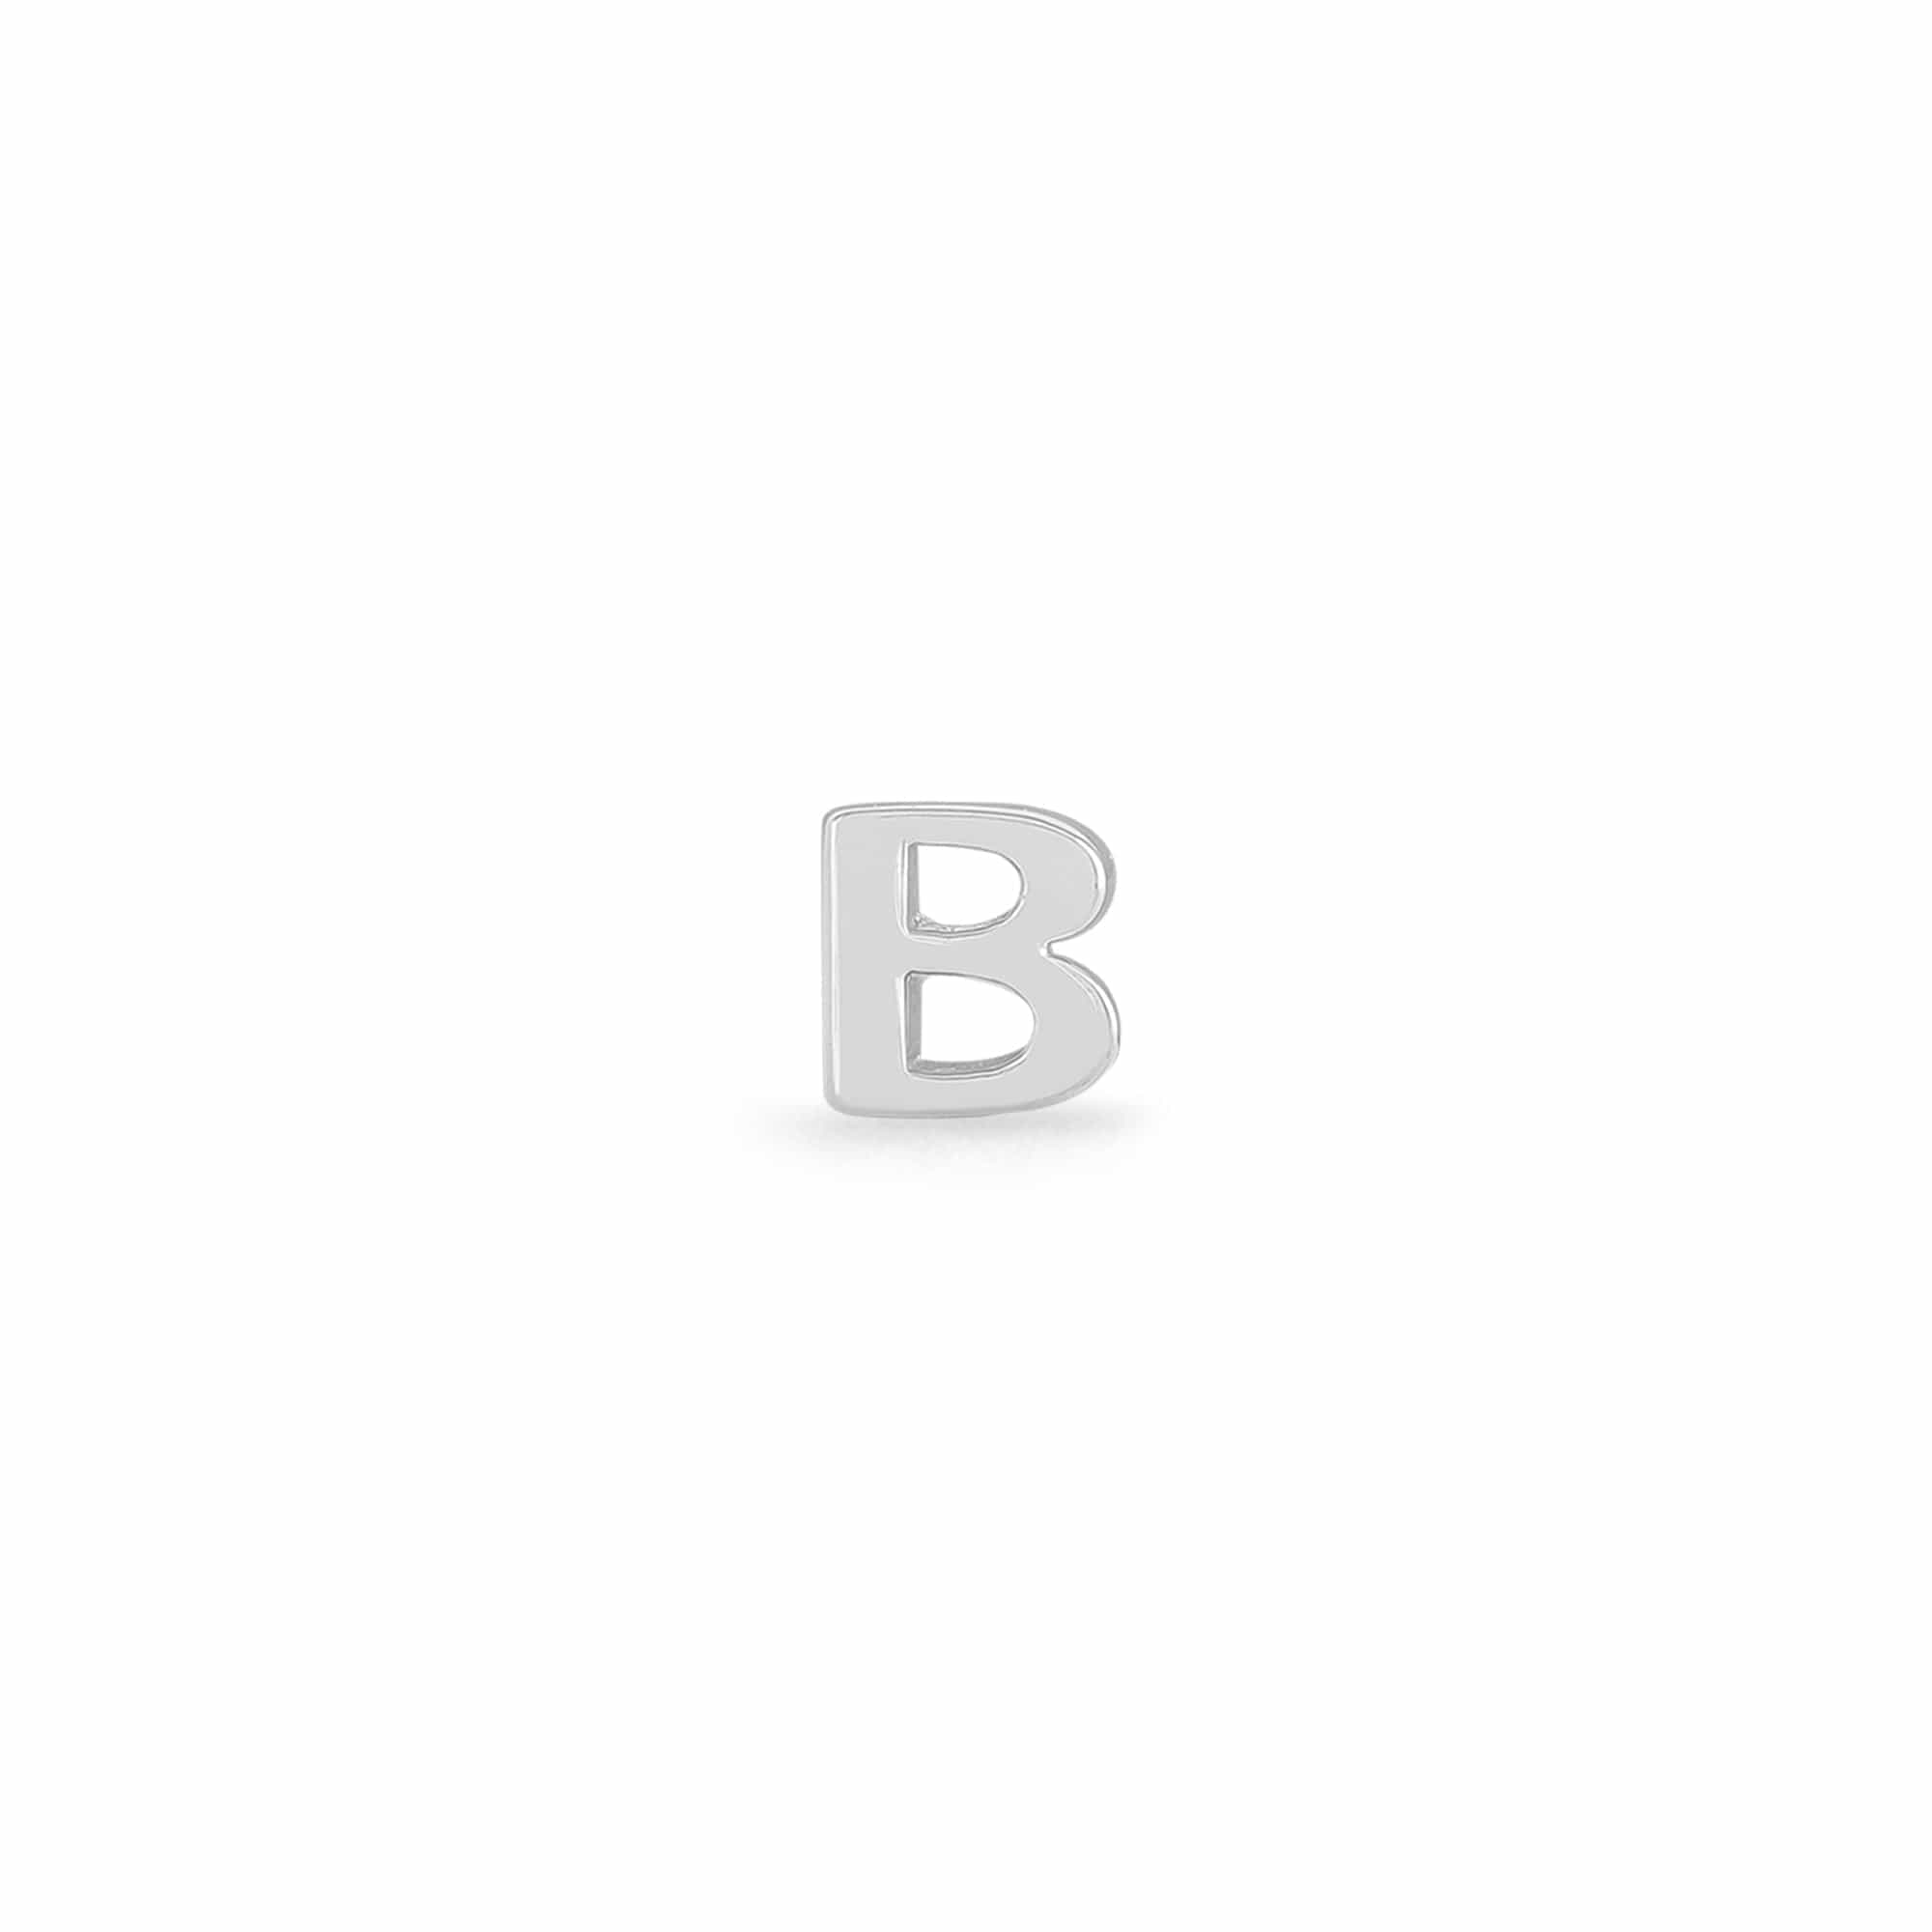 Boma Jewelry Earrings B Alphabet Single Letter Stud